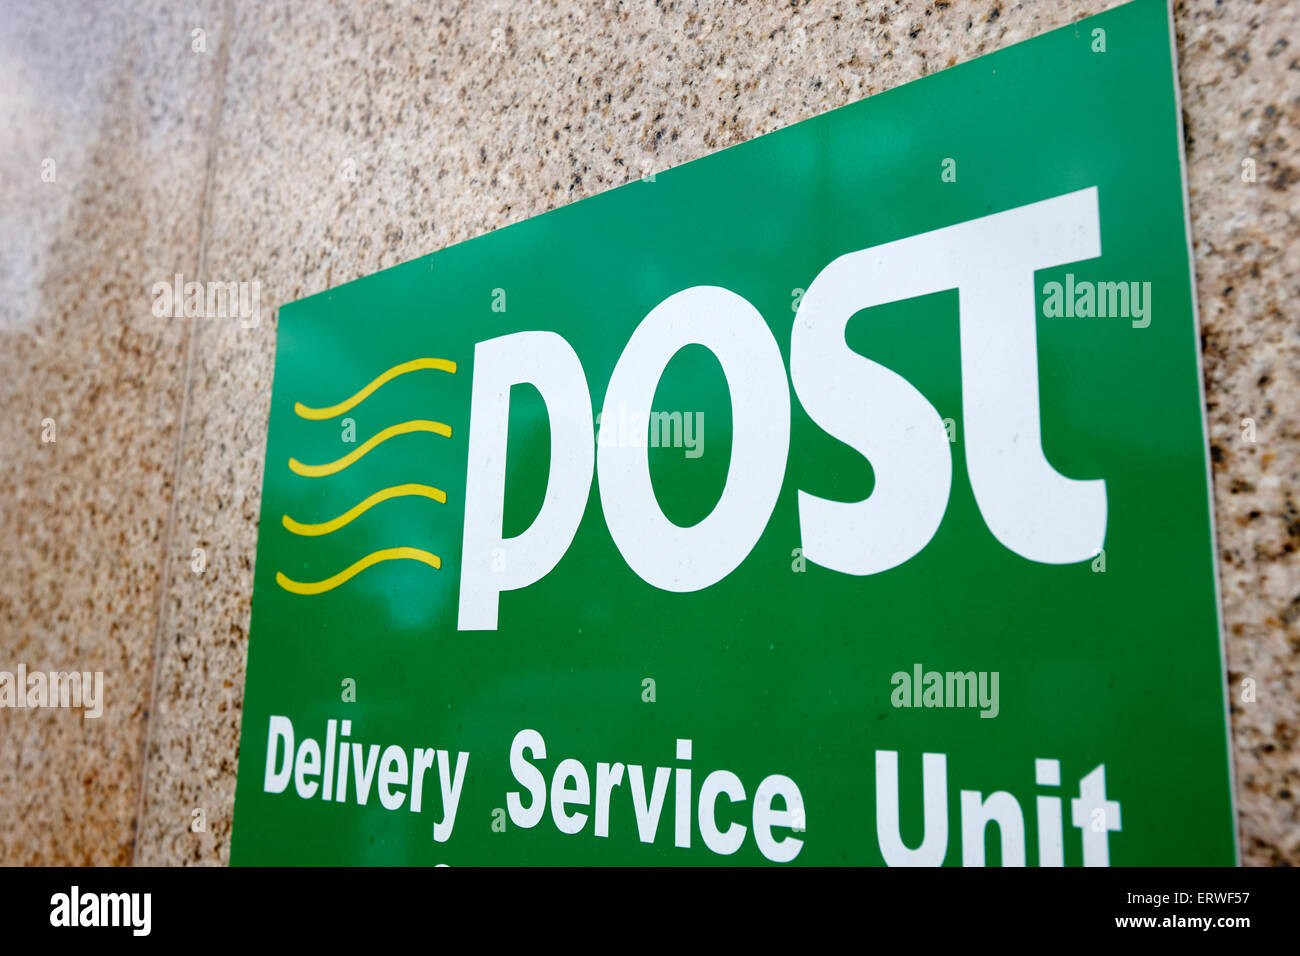 an post irish postal service delivery service unit sign Cootehill County Cavan Republic of Ireland Stock Photo